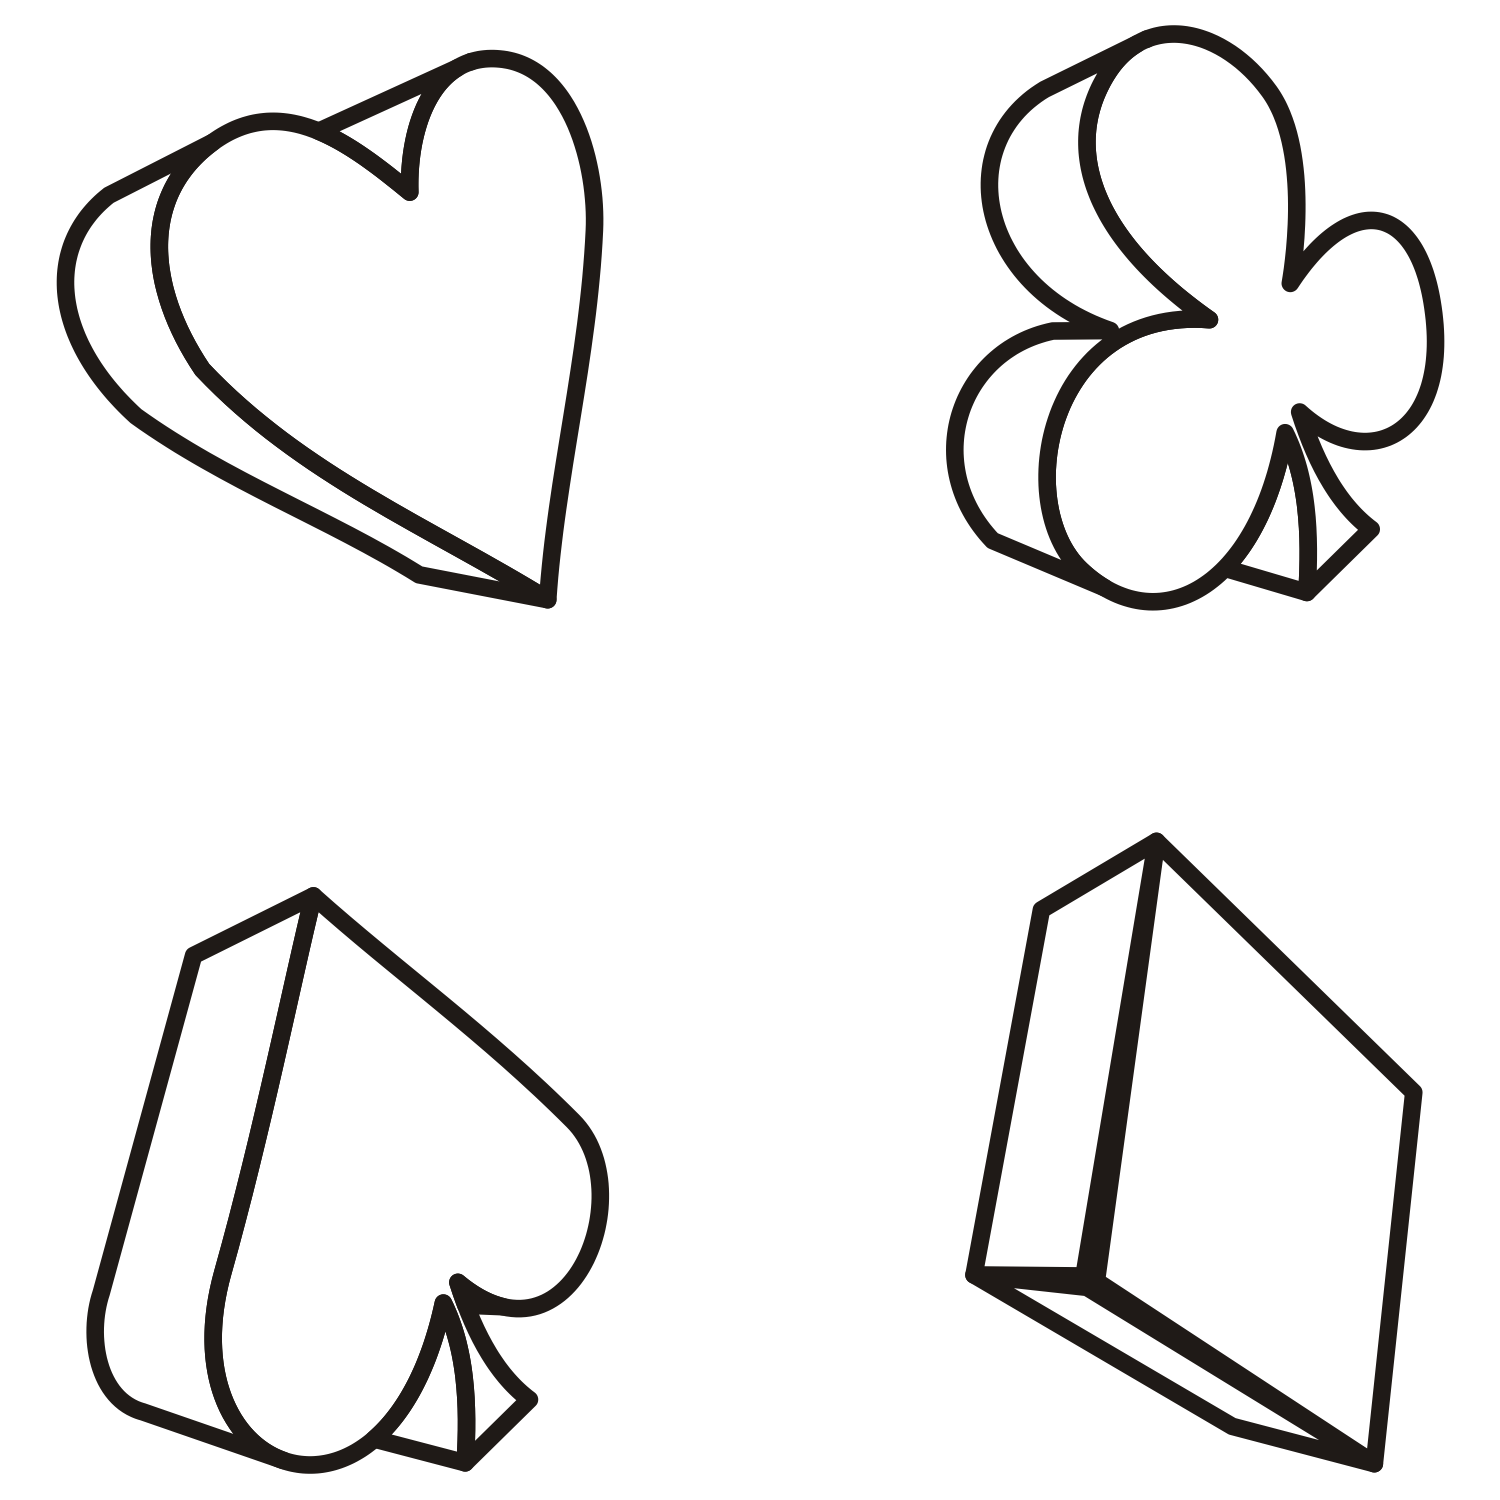 Hearts (card game) - Wikipedia